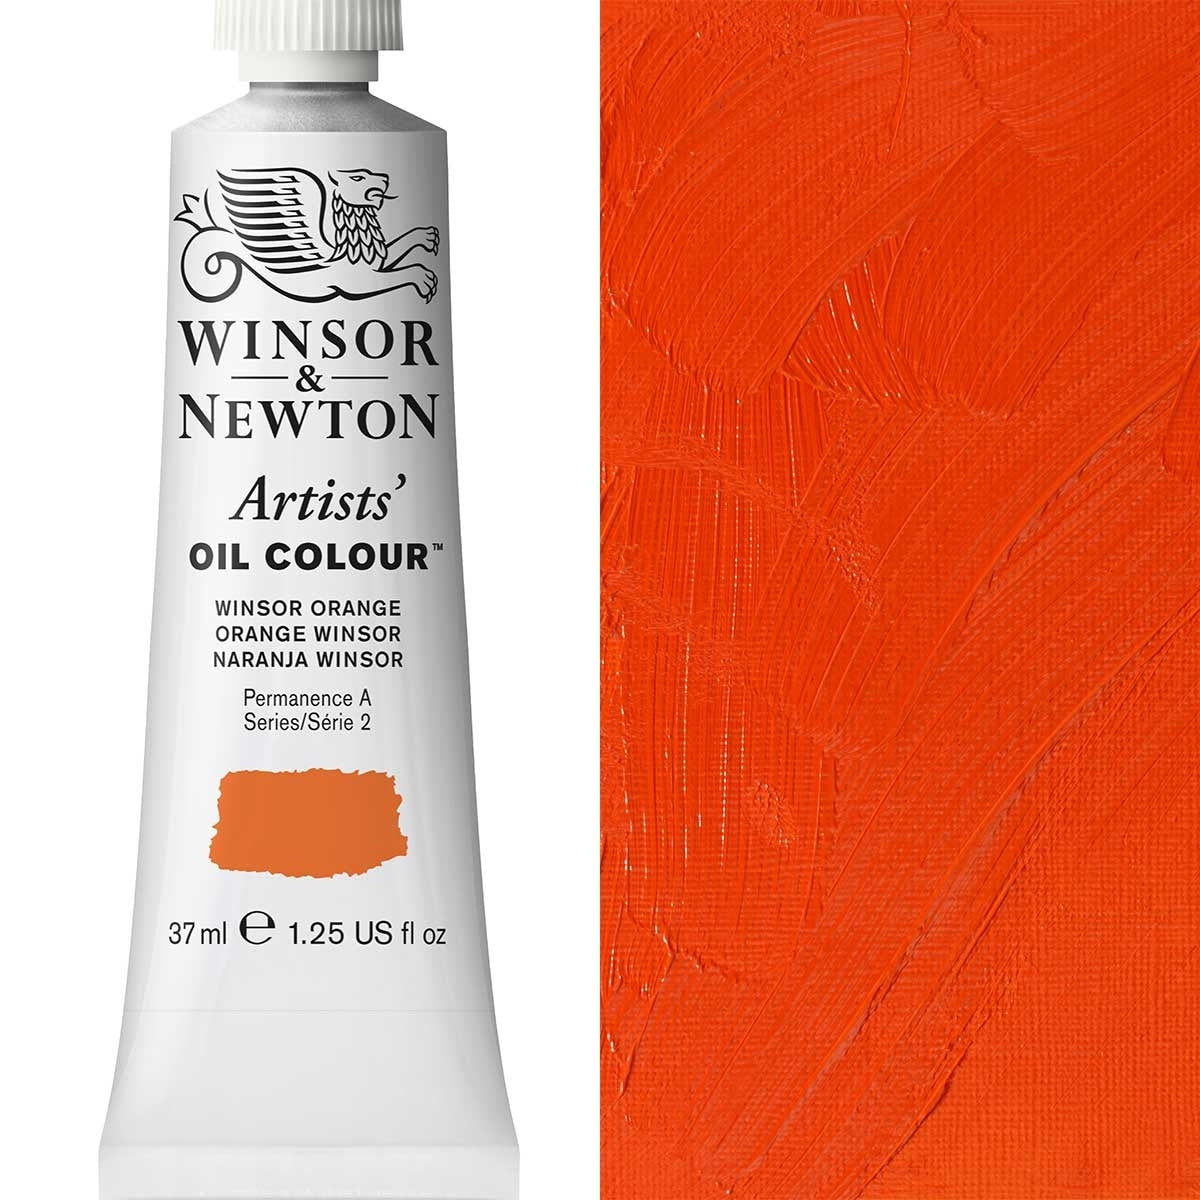 Winsor and Newton - Artists' Oil Colour - 37ml - Winsor Orange